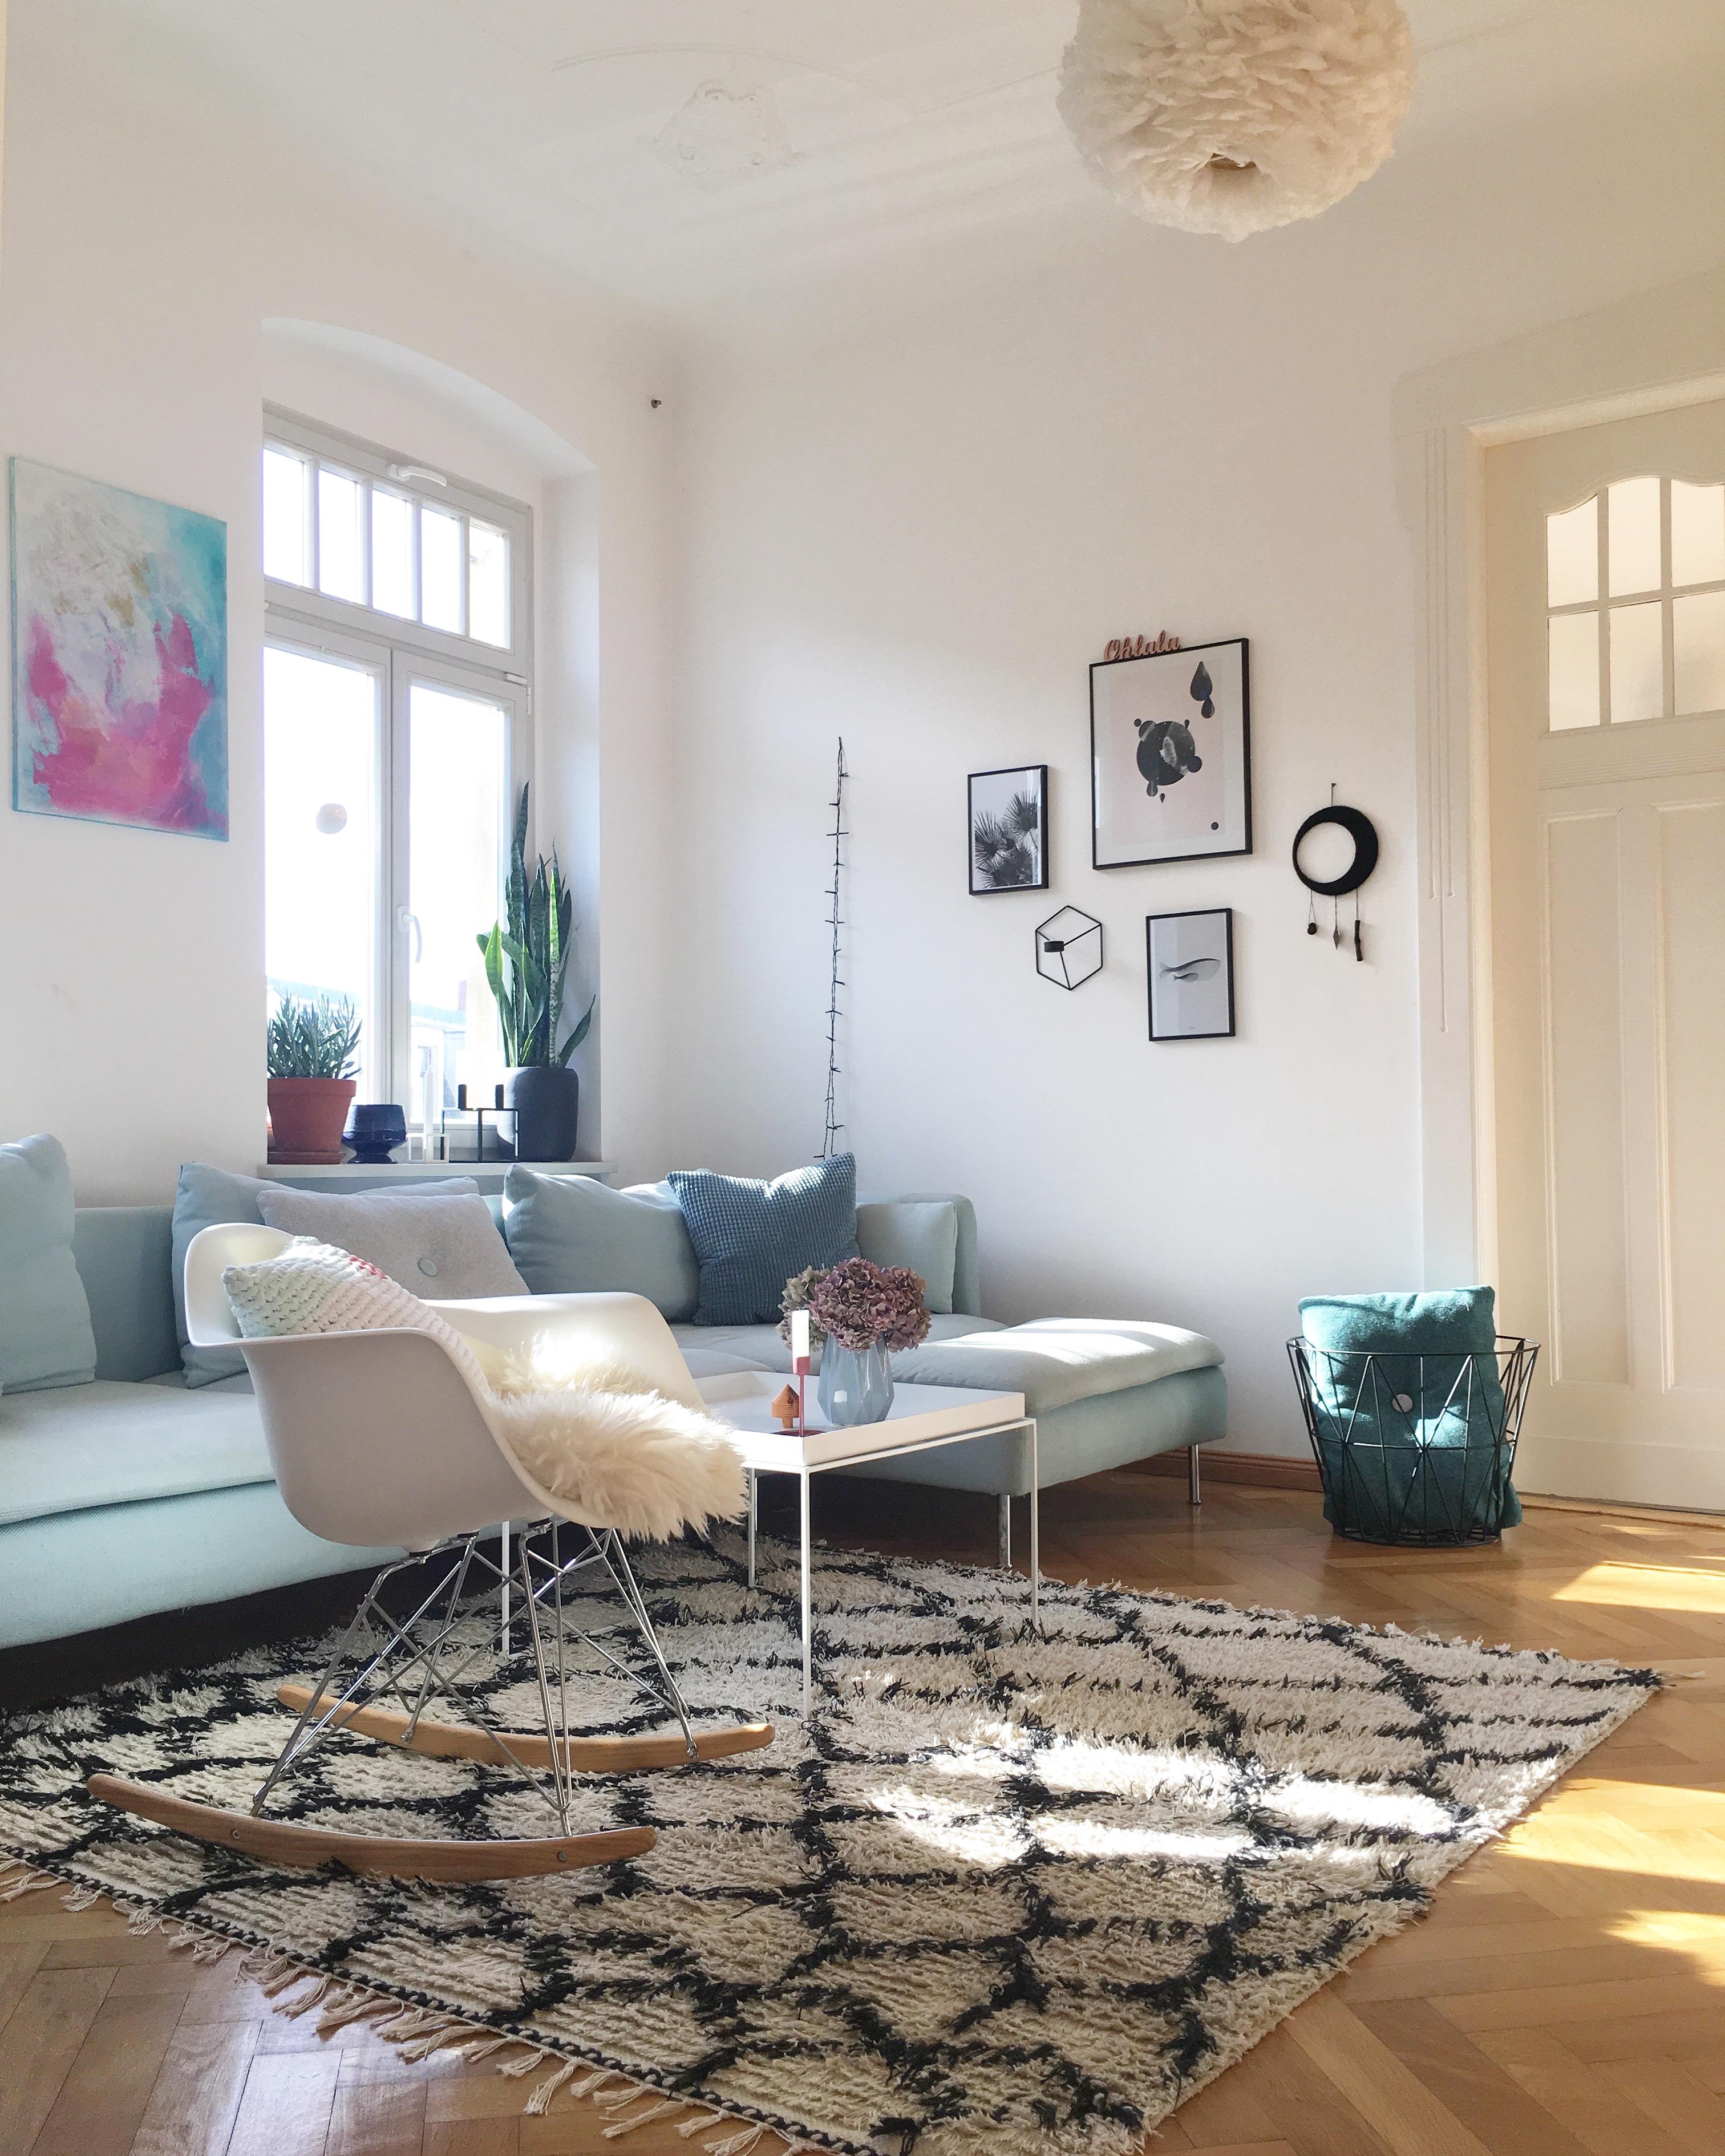 My livingroom on sunday morning...
#livingroom #homesweethome #scandinaviandesign #interiordesign #prints #art 